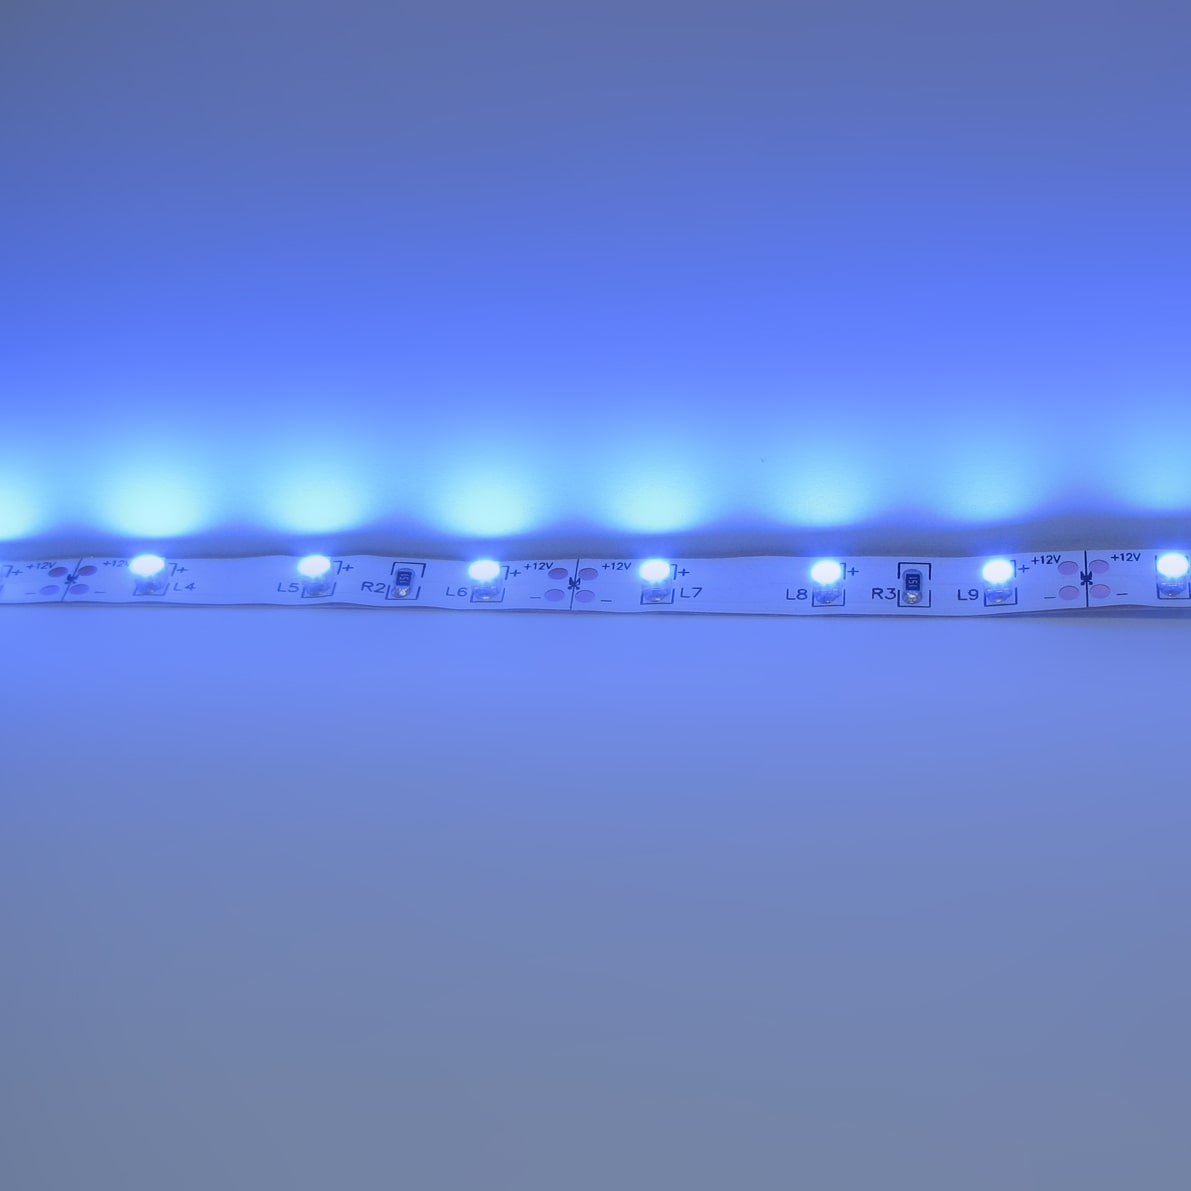 Открытые светодиодные ленты Icled 3528 60 led 12V